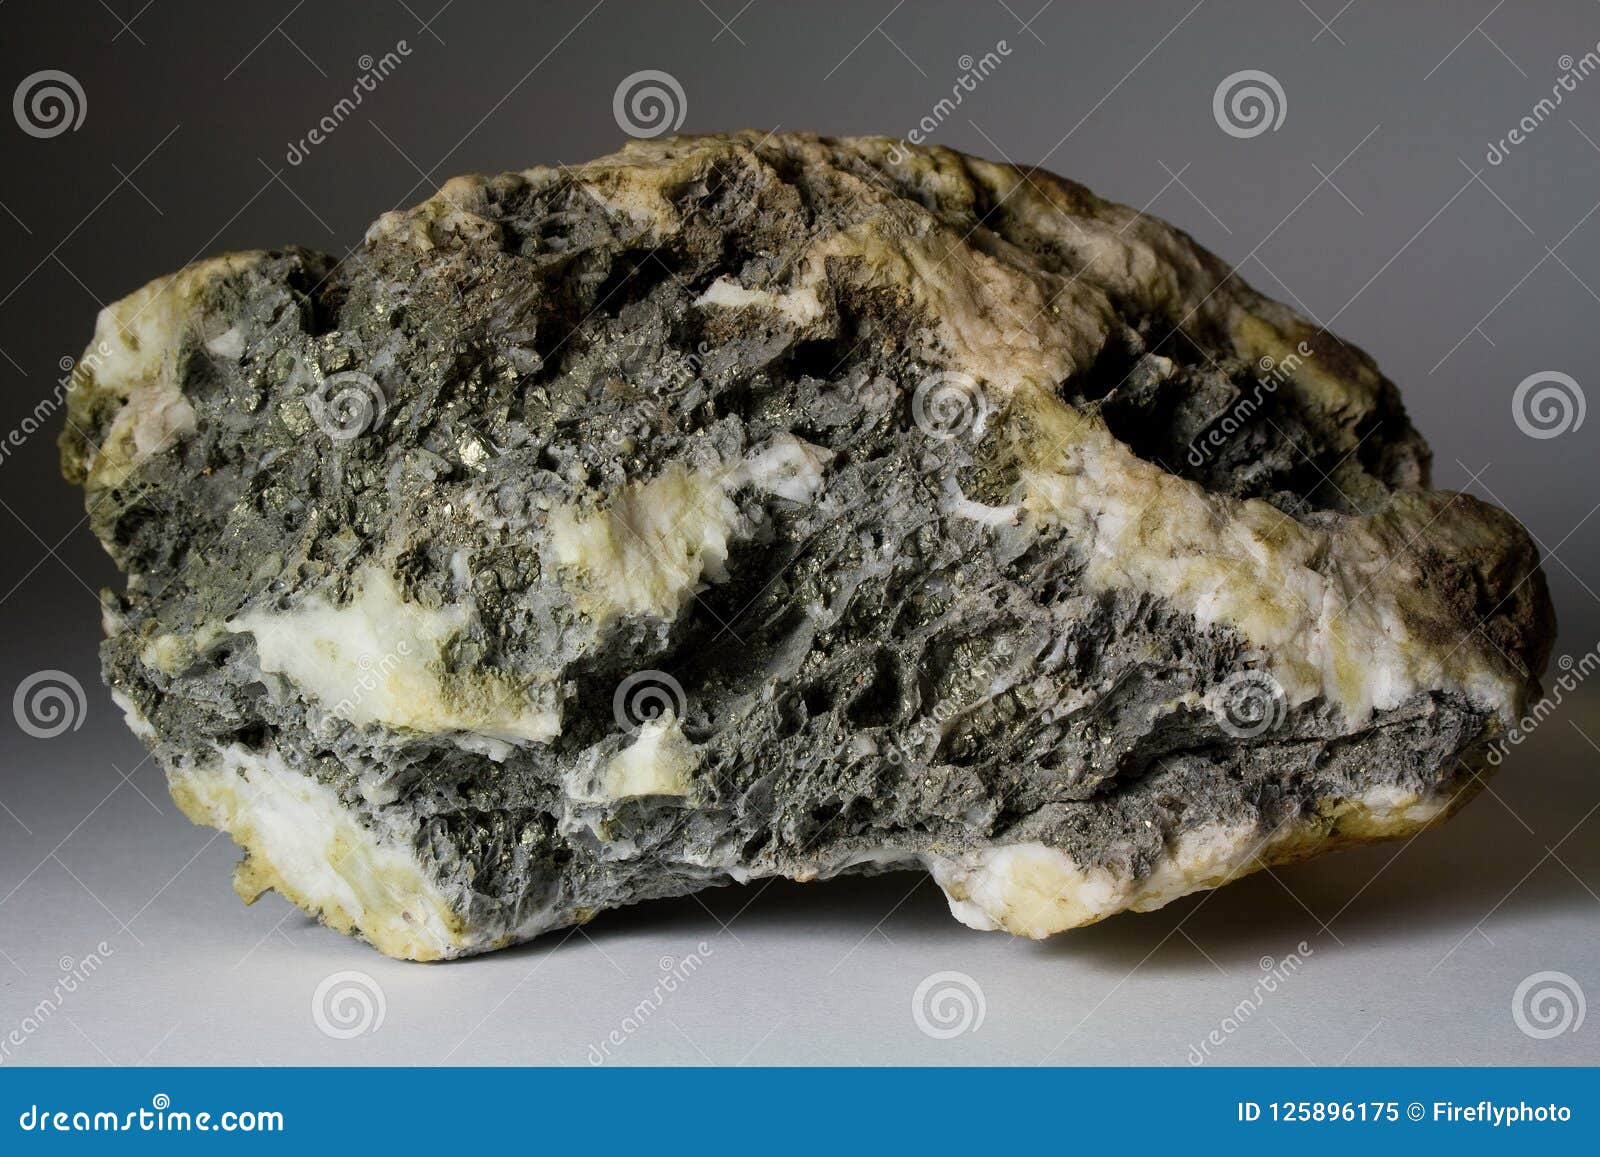 high grade silver ore found near philpsburg montana usa mining industry high grade silver ore montana usa 125896175